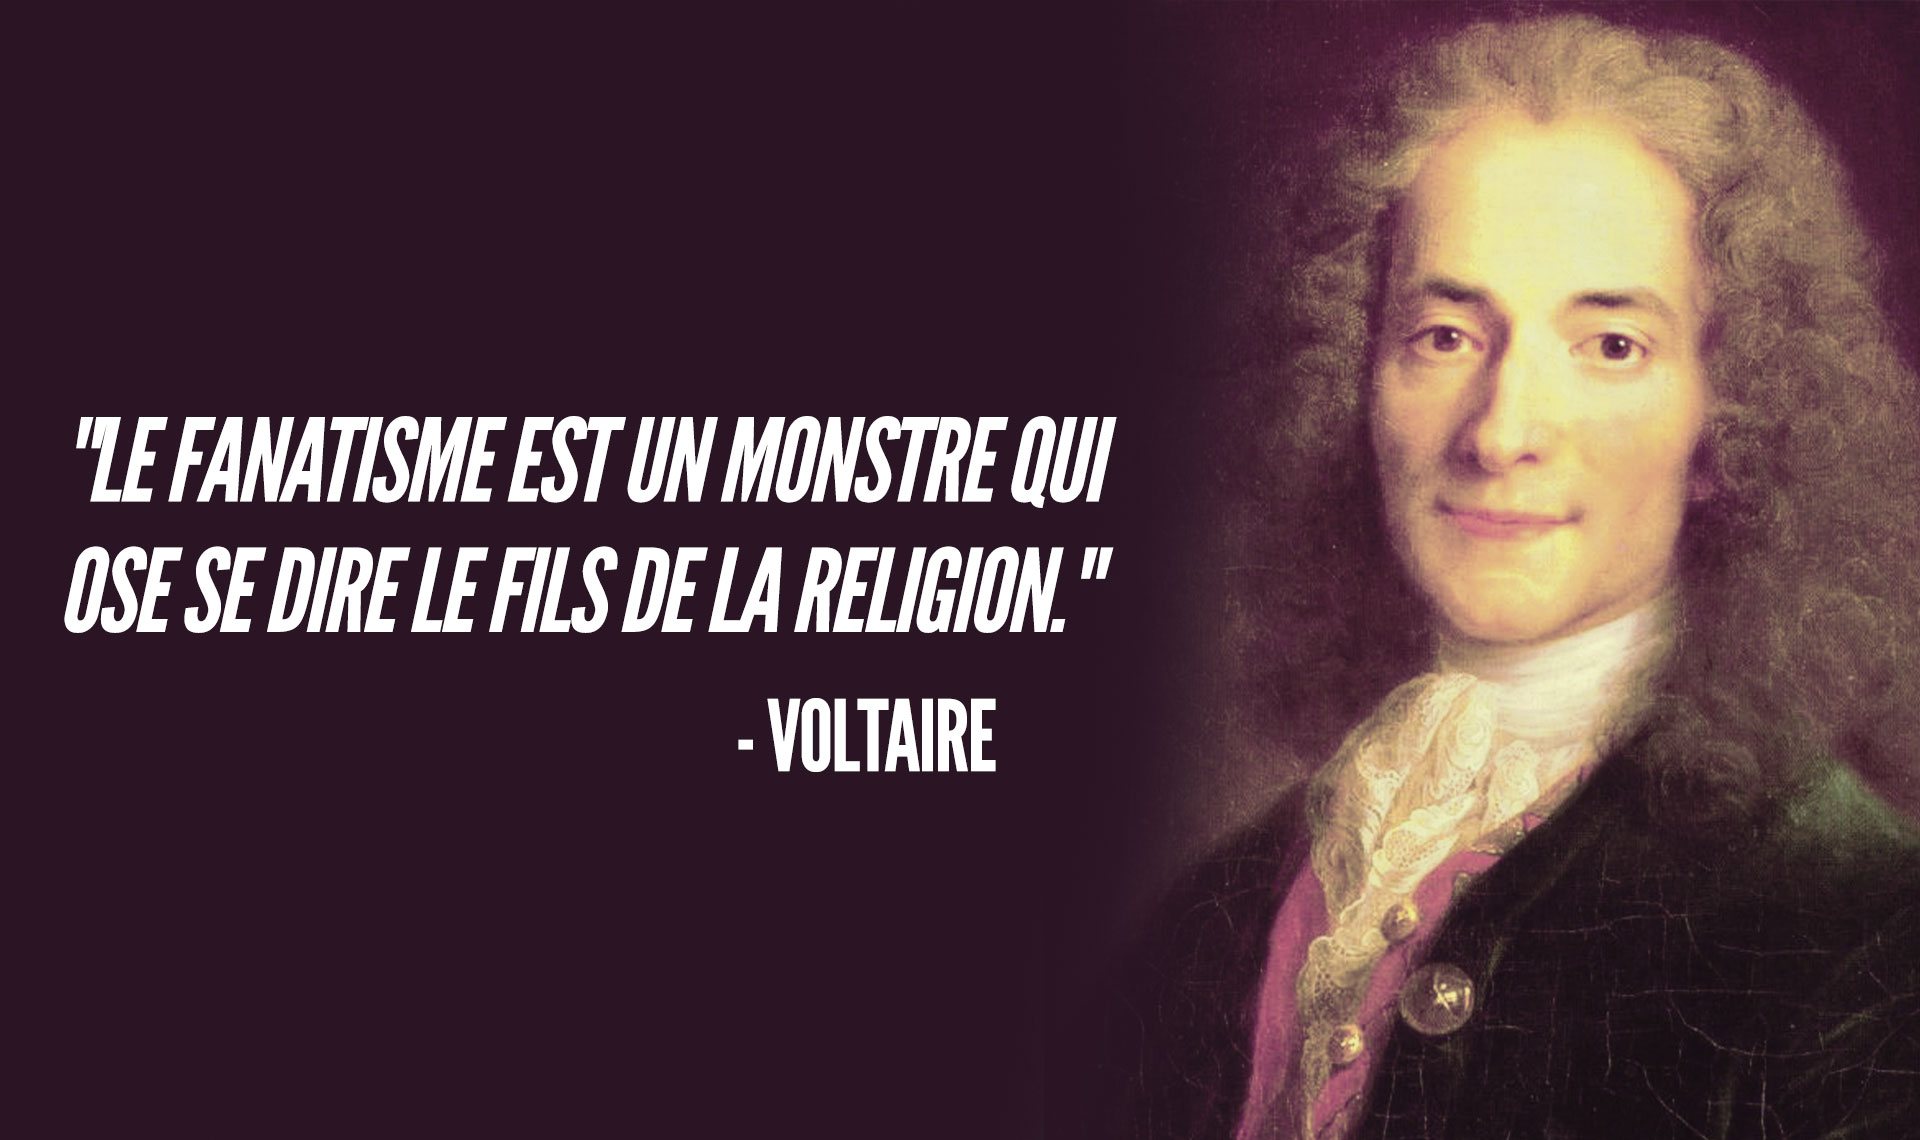 Voltaire fanatisme